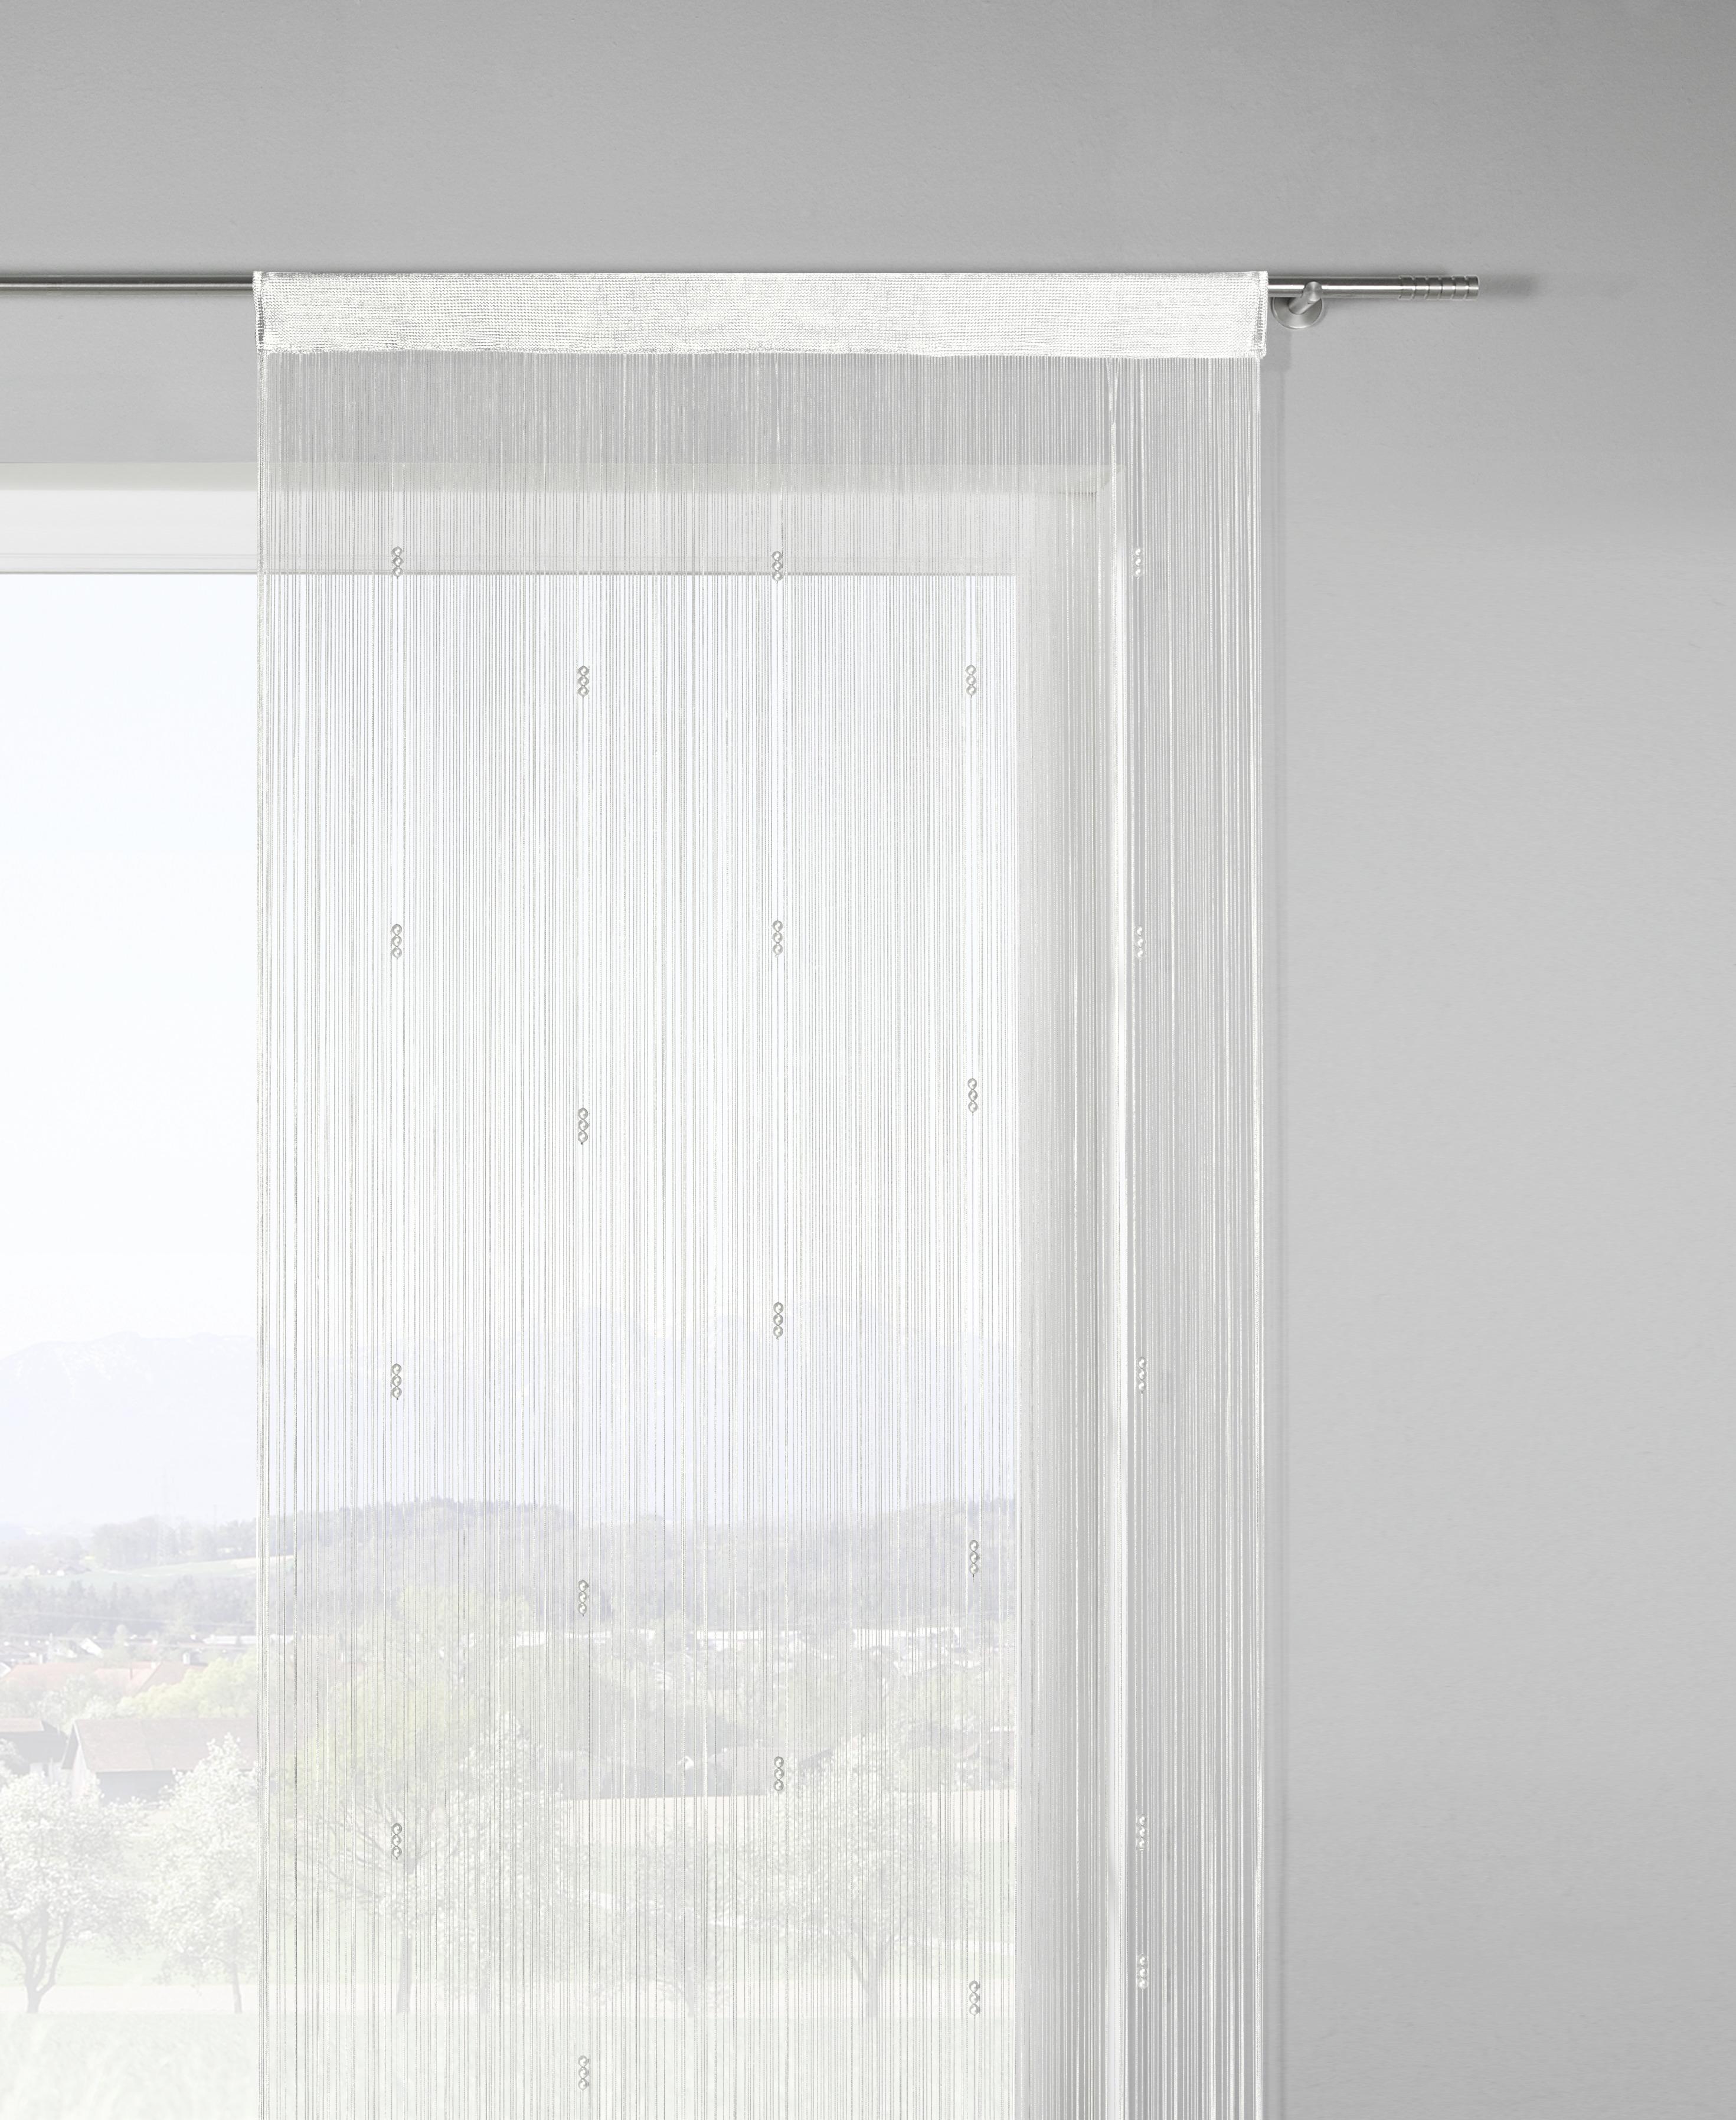 Fadenstore Perle in Weiß ca. 90x245cm - Weiss, Romantik / Landhaus, Textil (90/245cm) - Modern Living